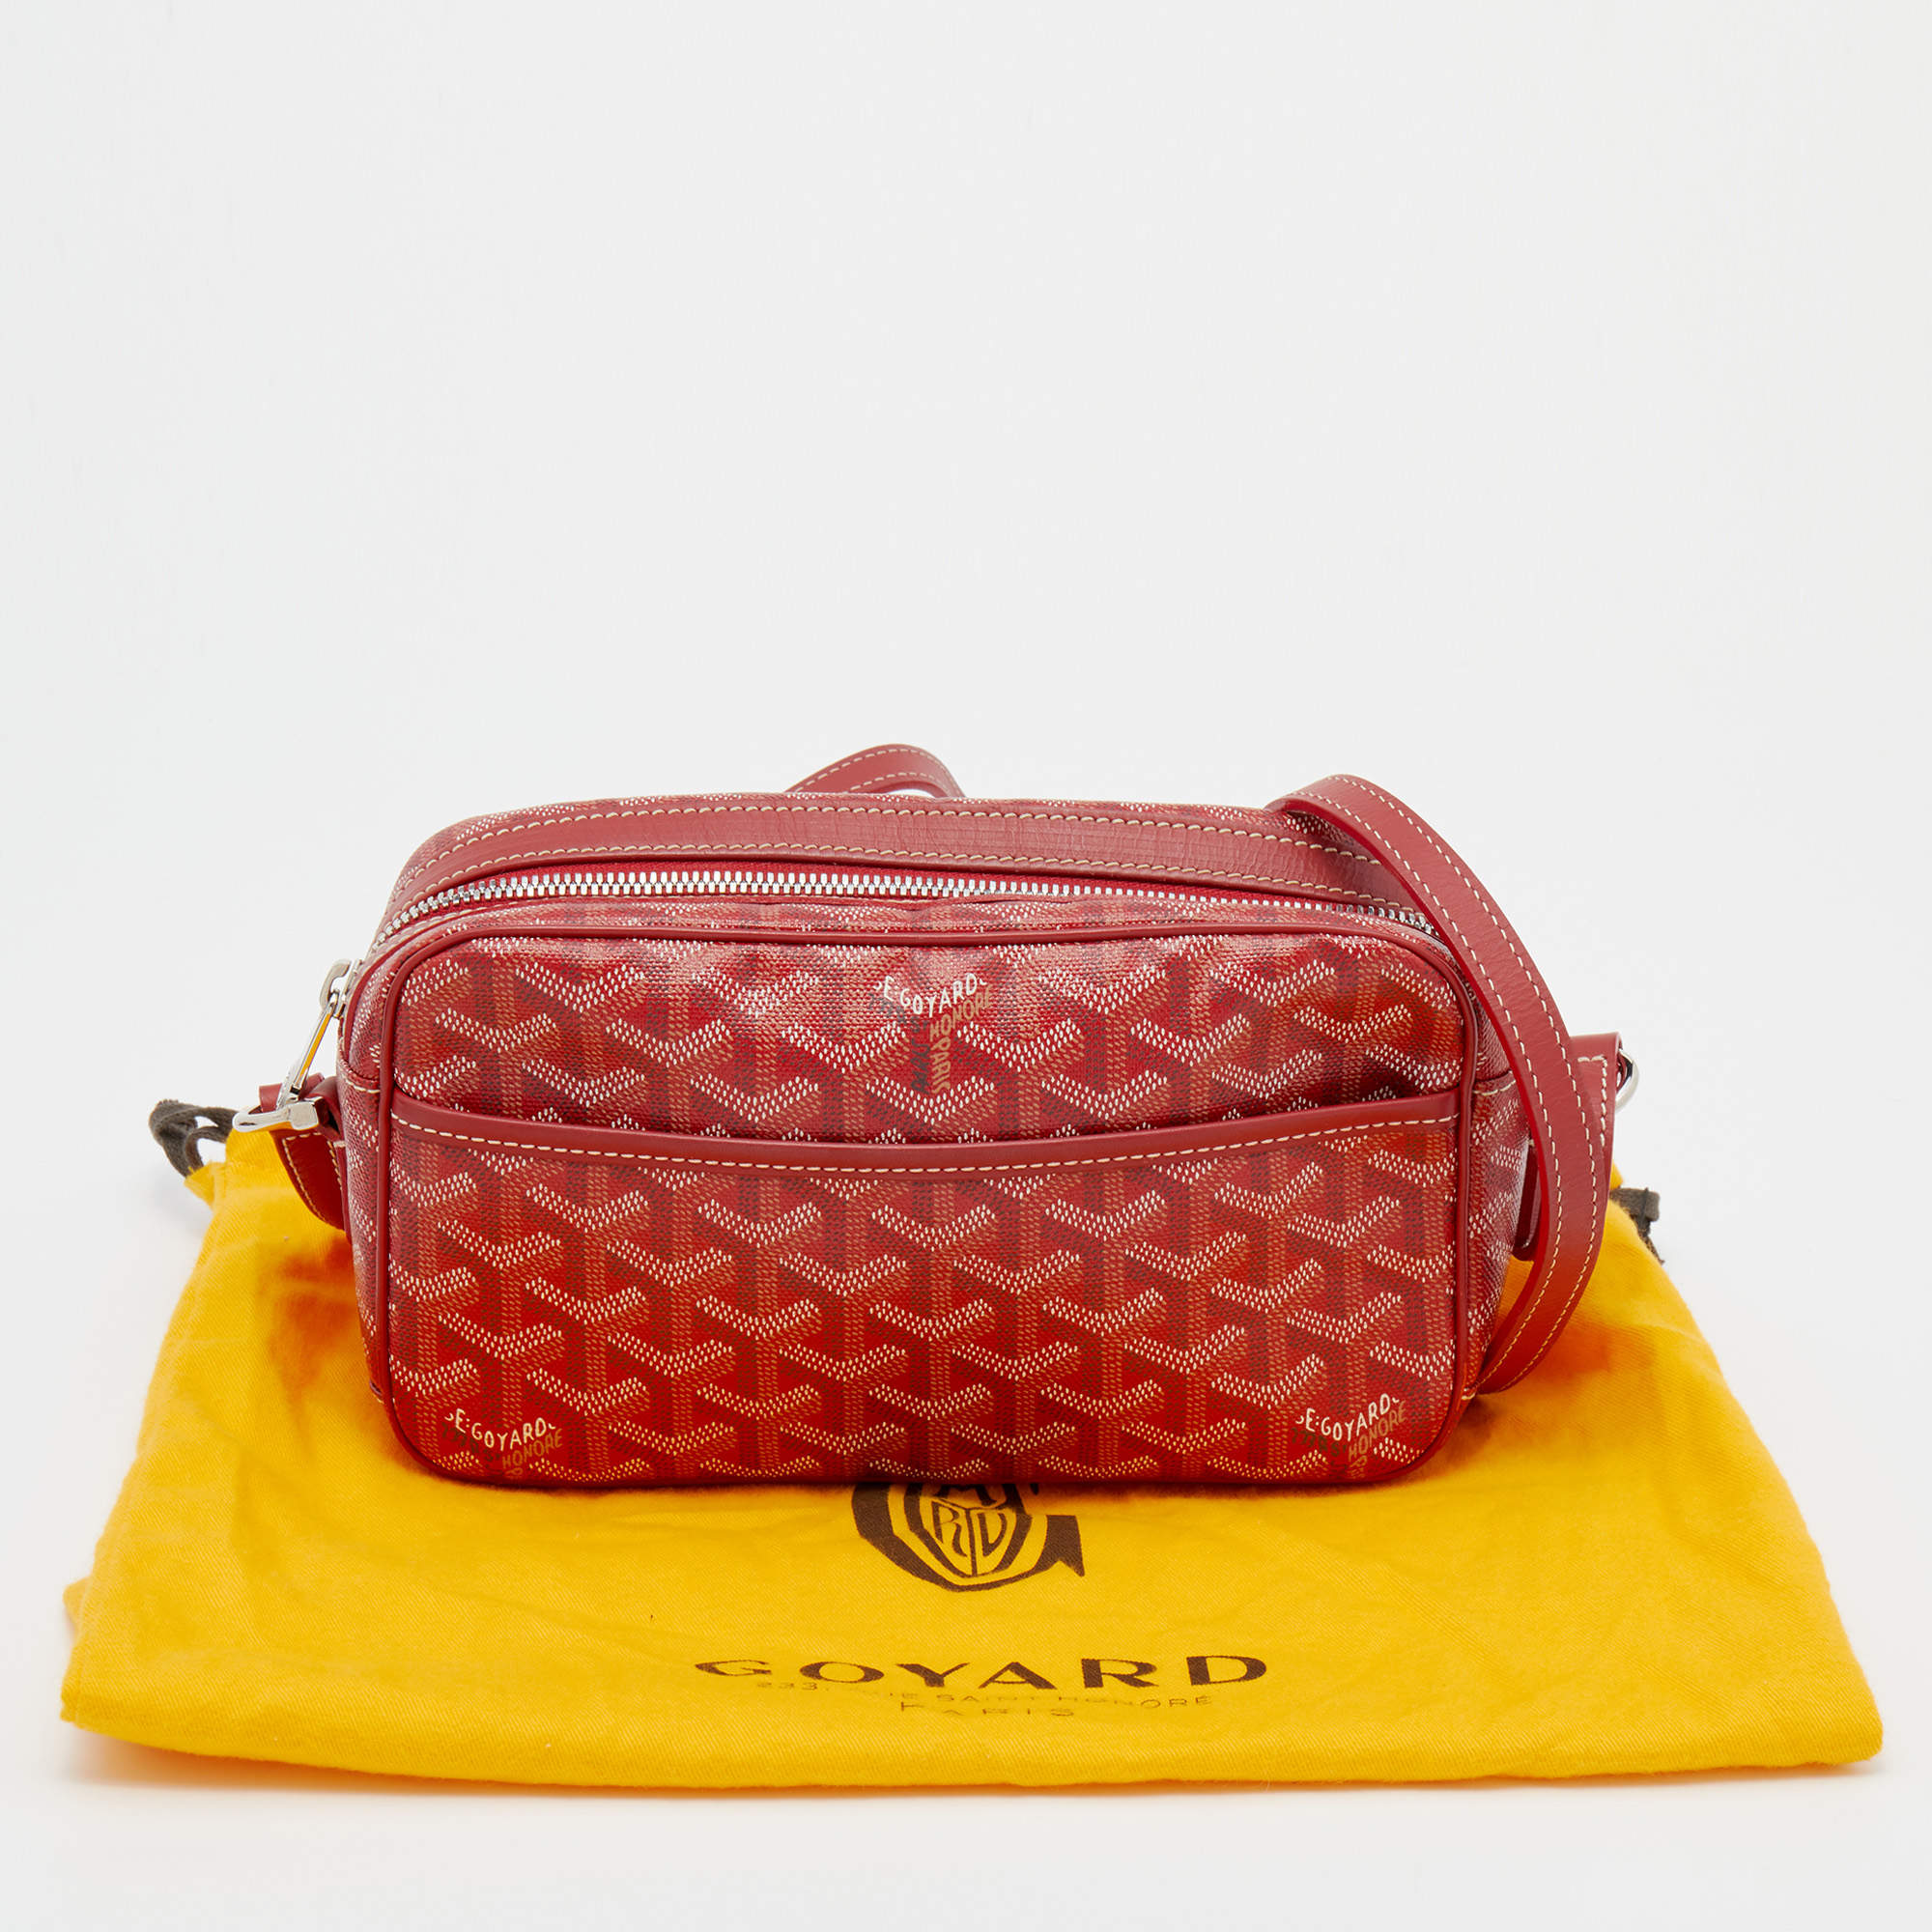 Cap vert leather handbag Goyard Red in Leather - 30691579